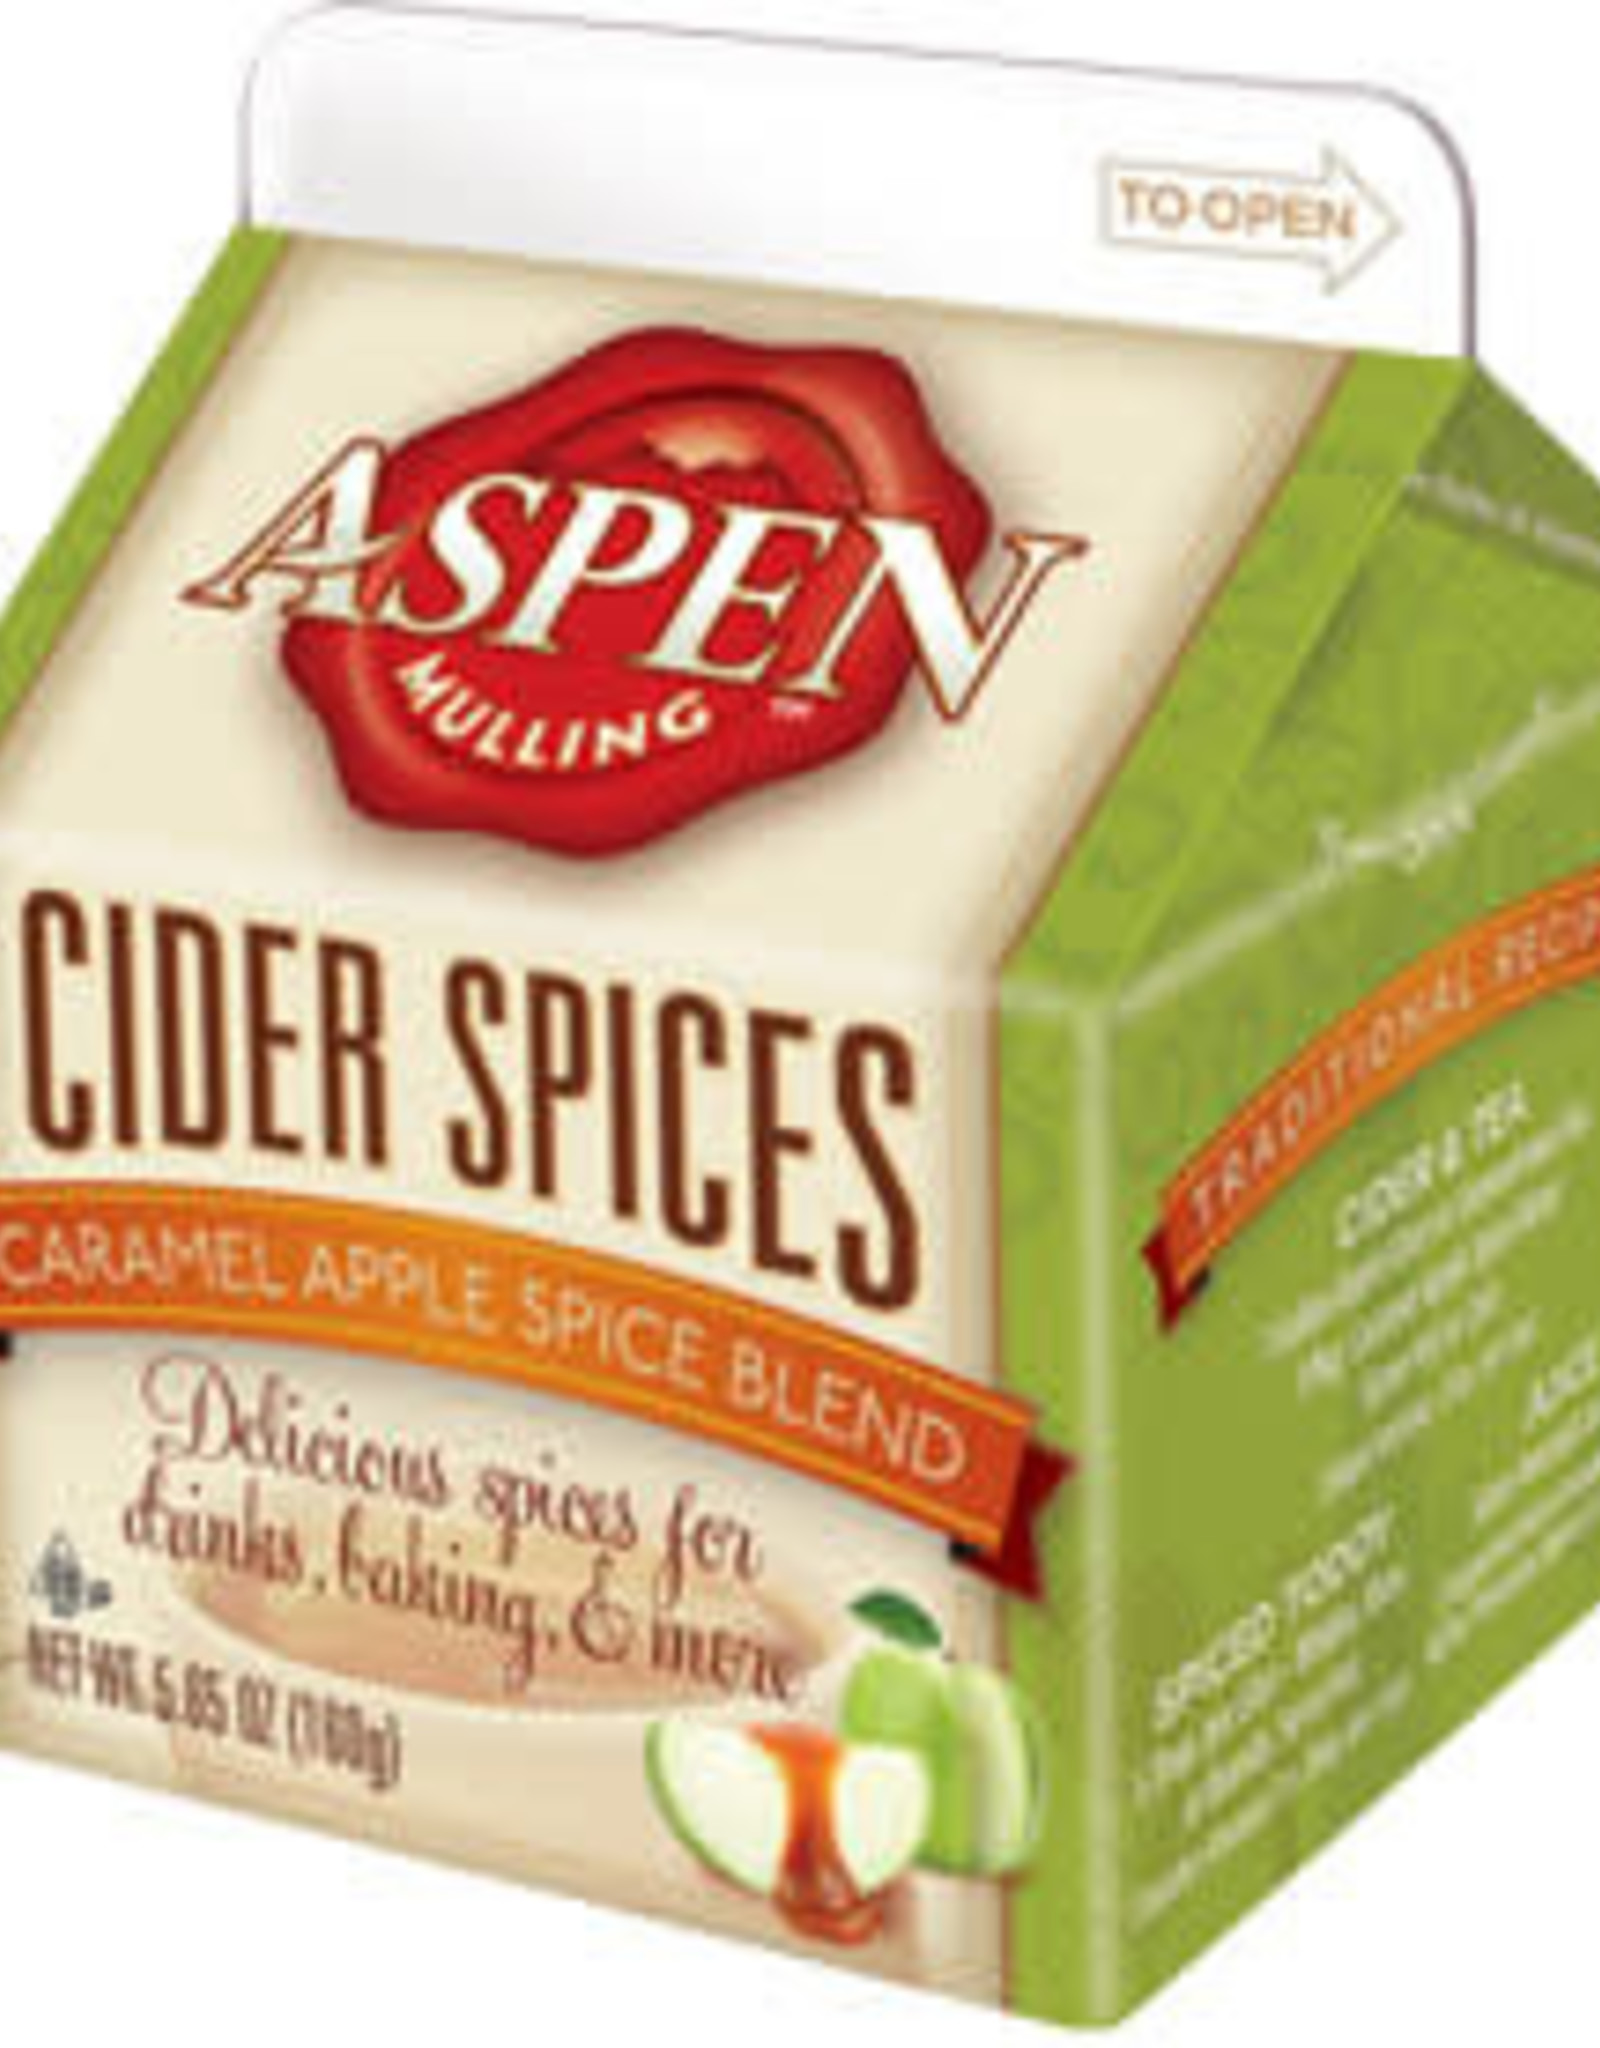 Aspen Cider Spice Mix Carmel Apple